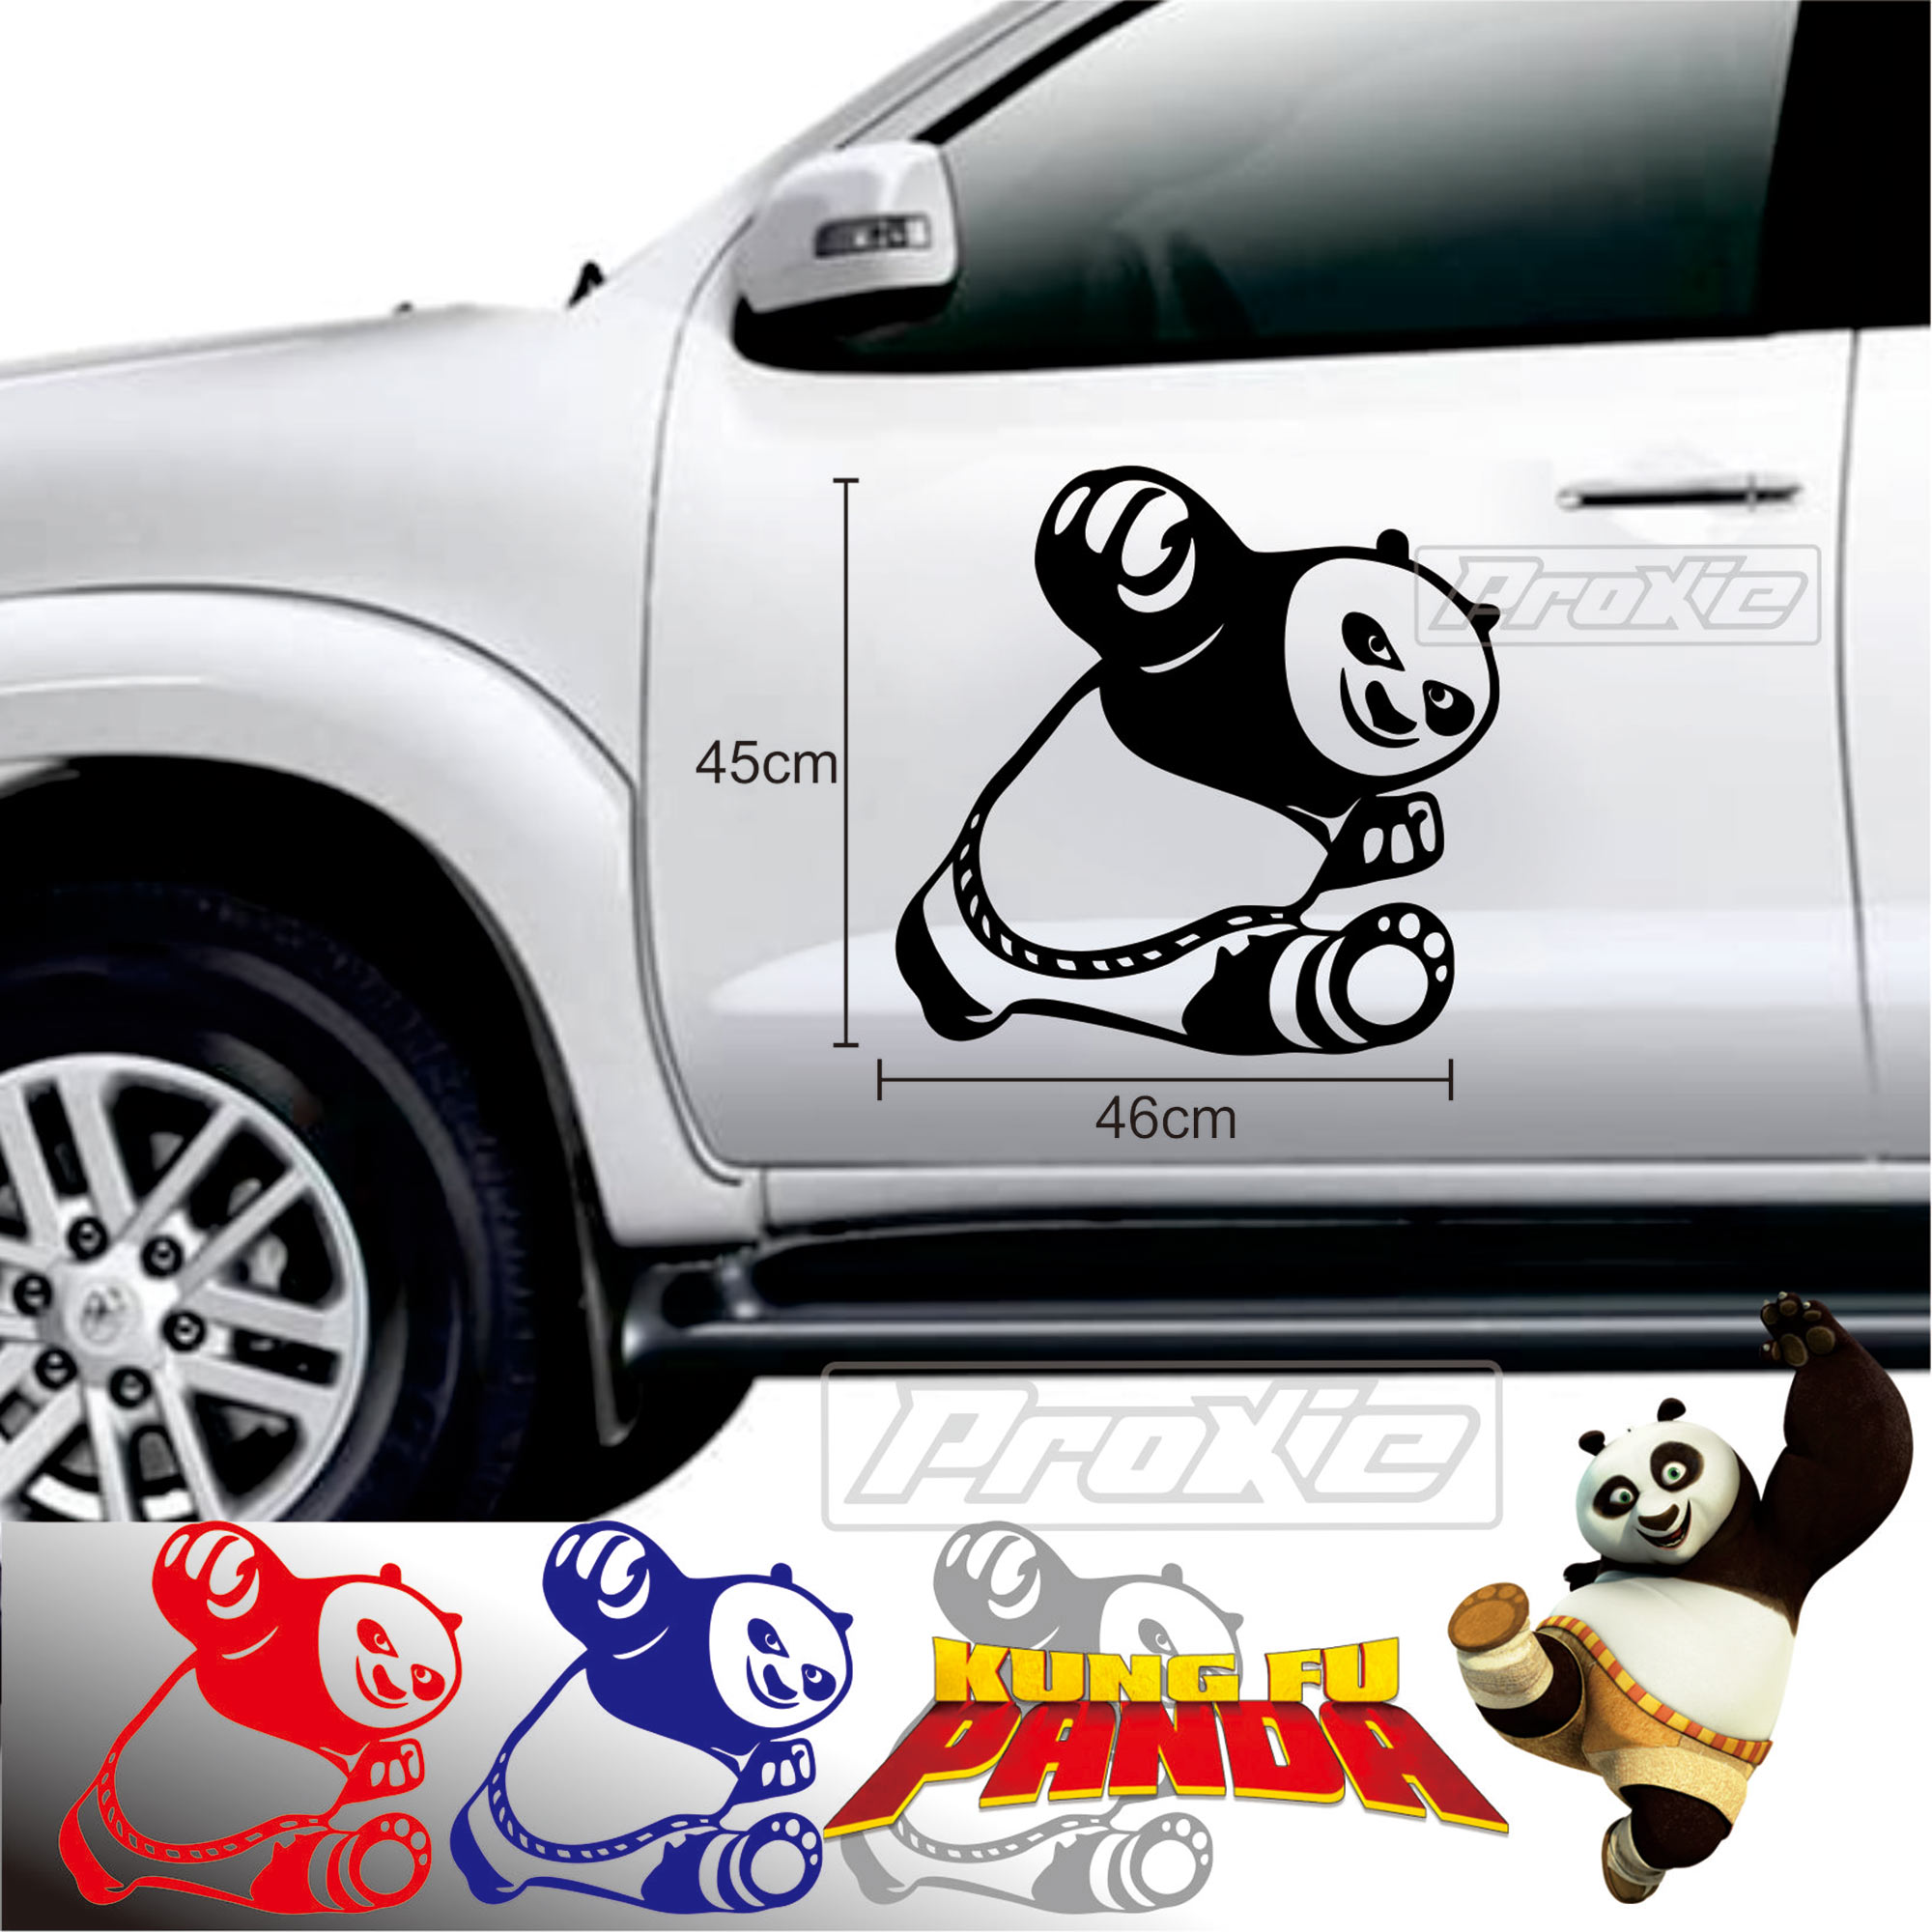 TERMURAH Cutting Sticker Mobil Sticker Animasi Panda Lazada Indonesia